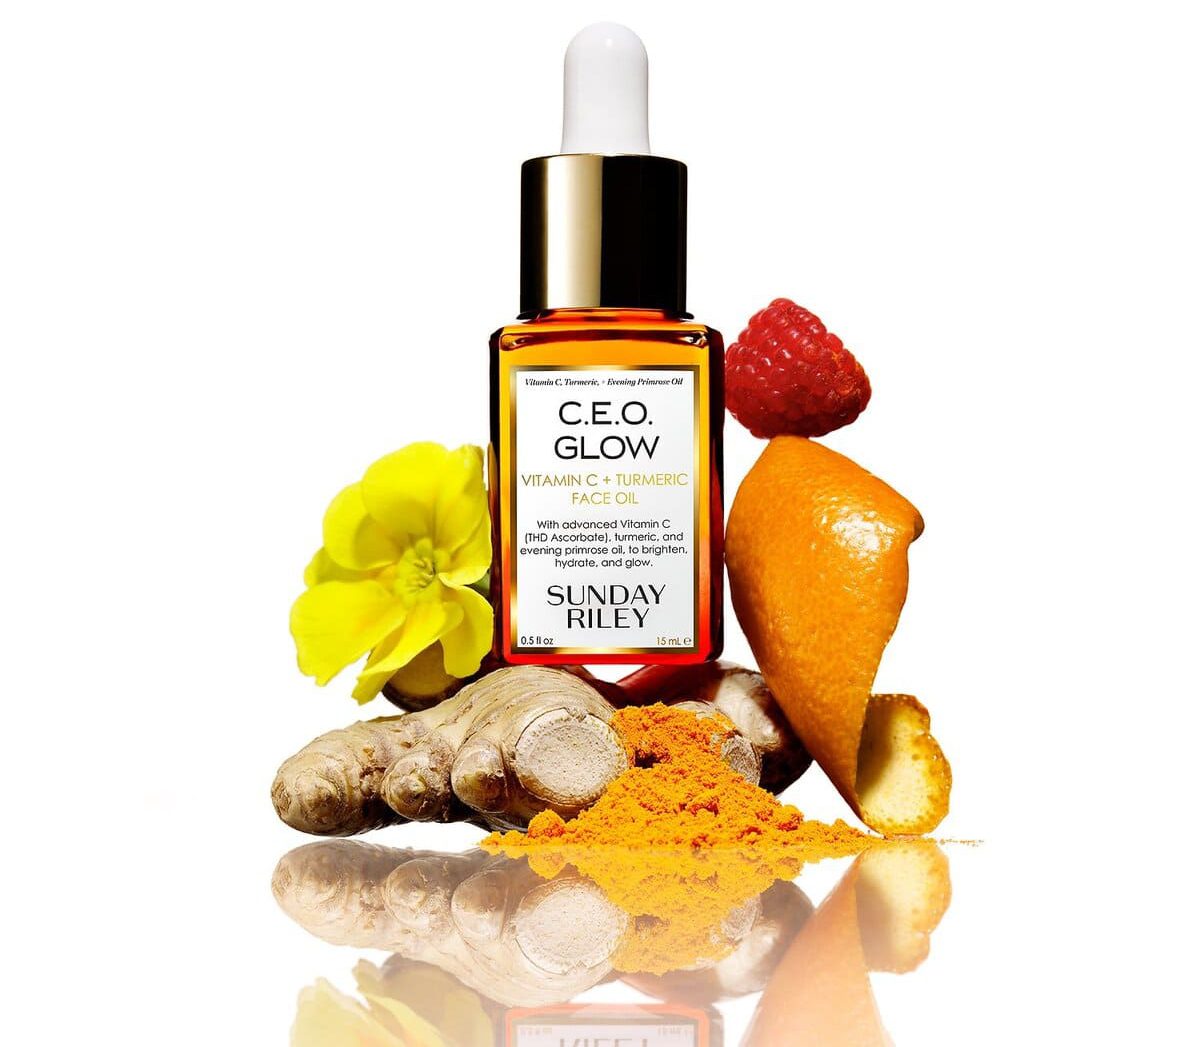 Sunday Riley C.E.O Glow Vitamin C + Turmeric Face Oil from Sephora